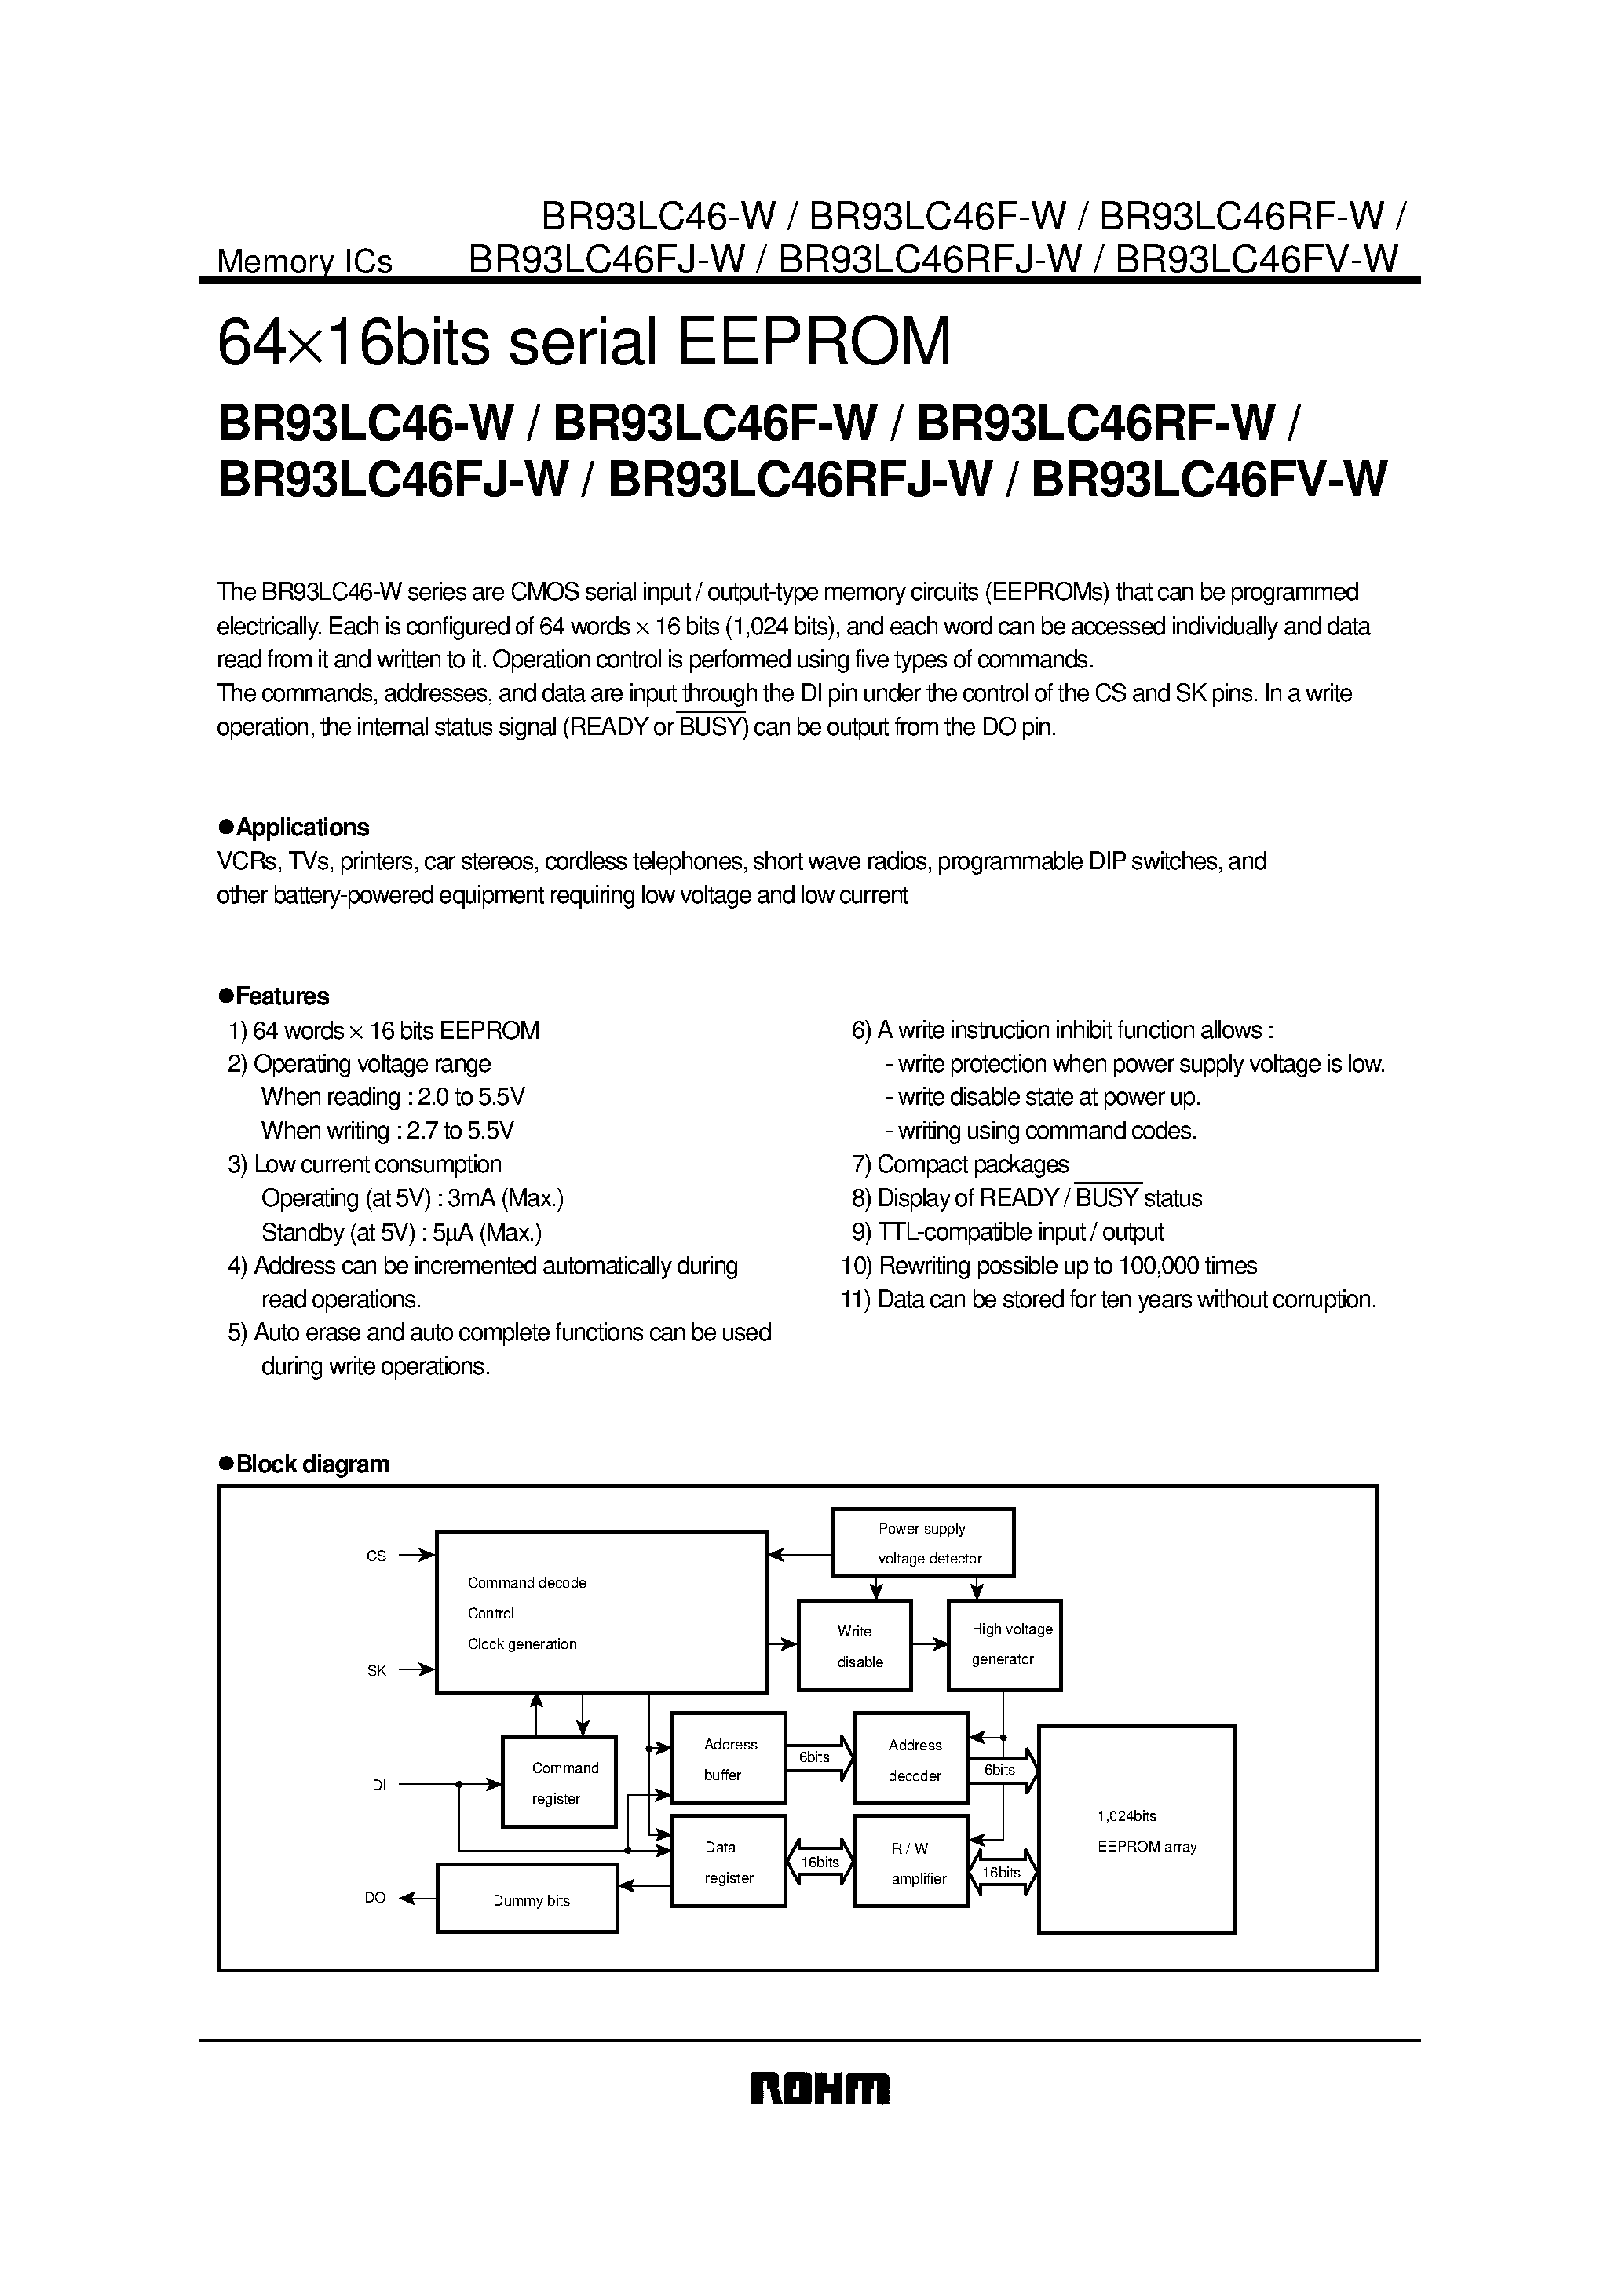 Datasheet BR93LC46FJ-W - 6416bits serial EEPROM page 1